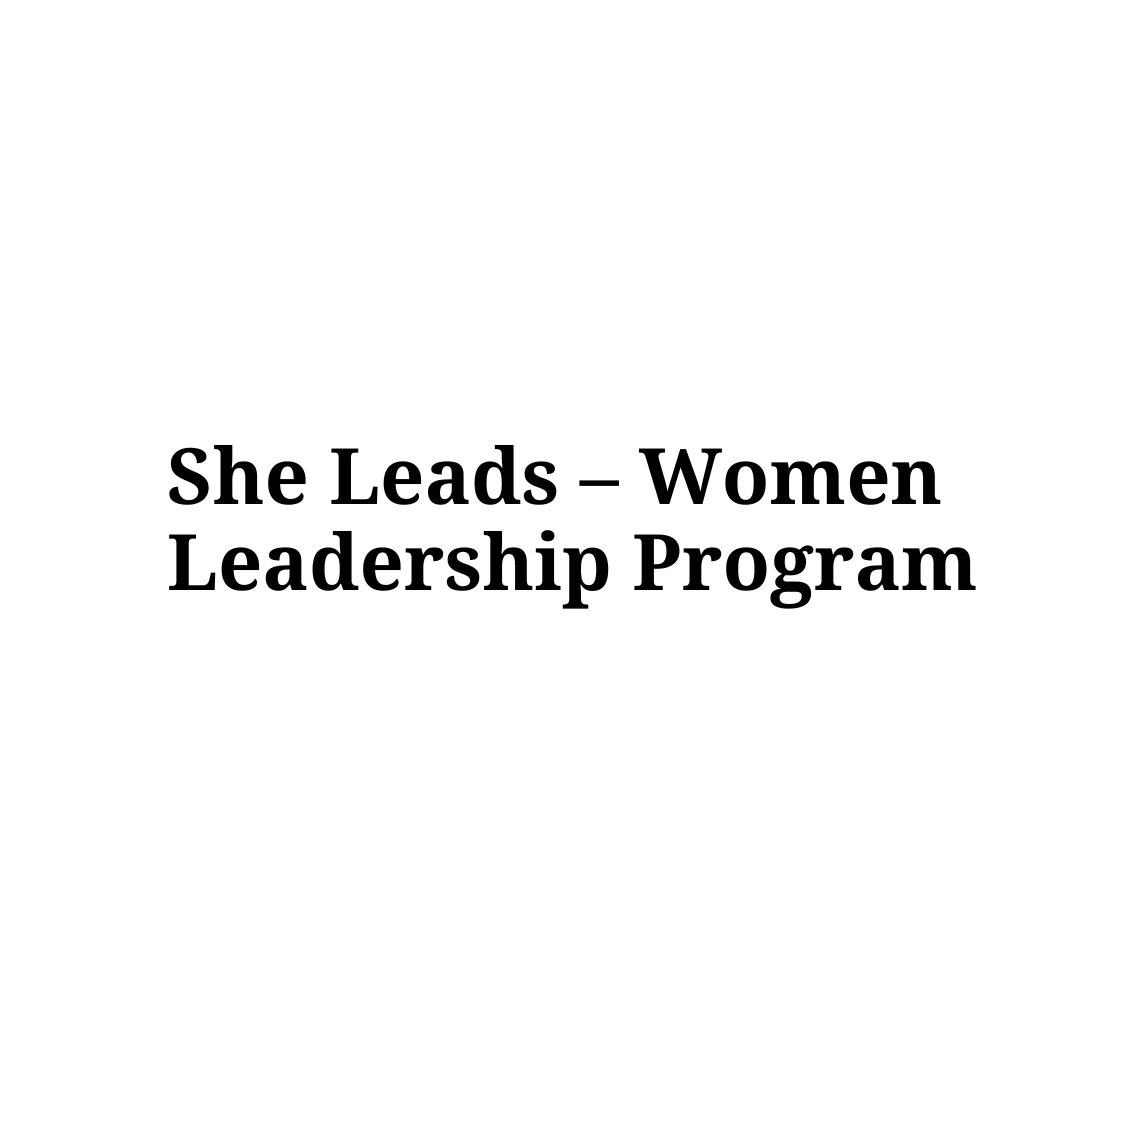 She Leads – Women Leadership Program